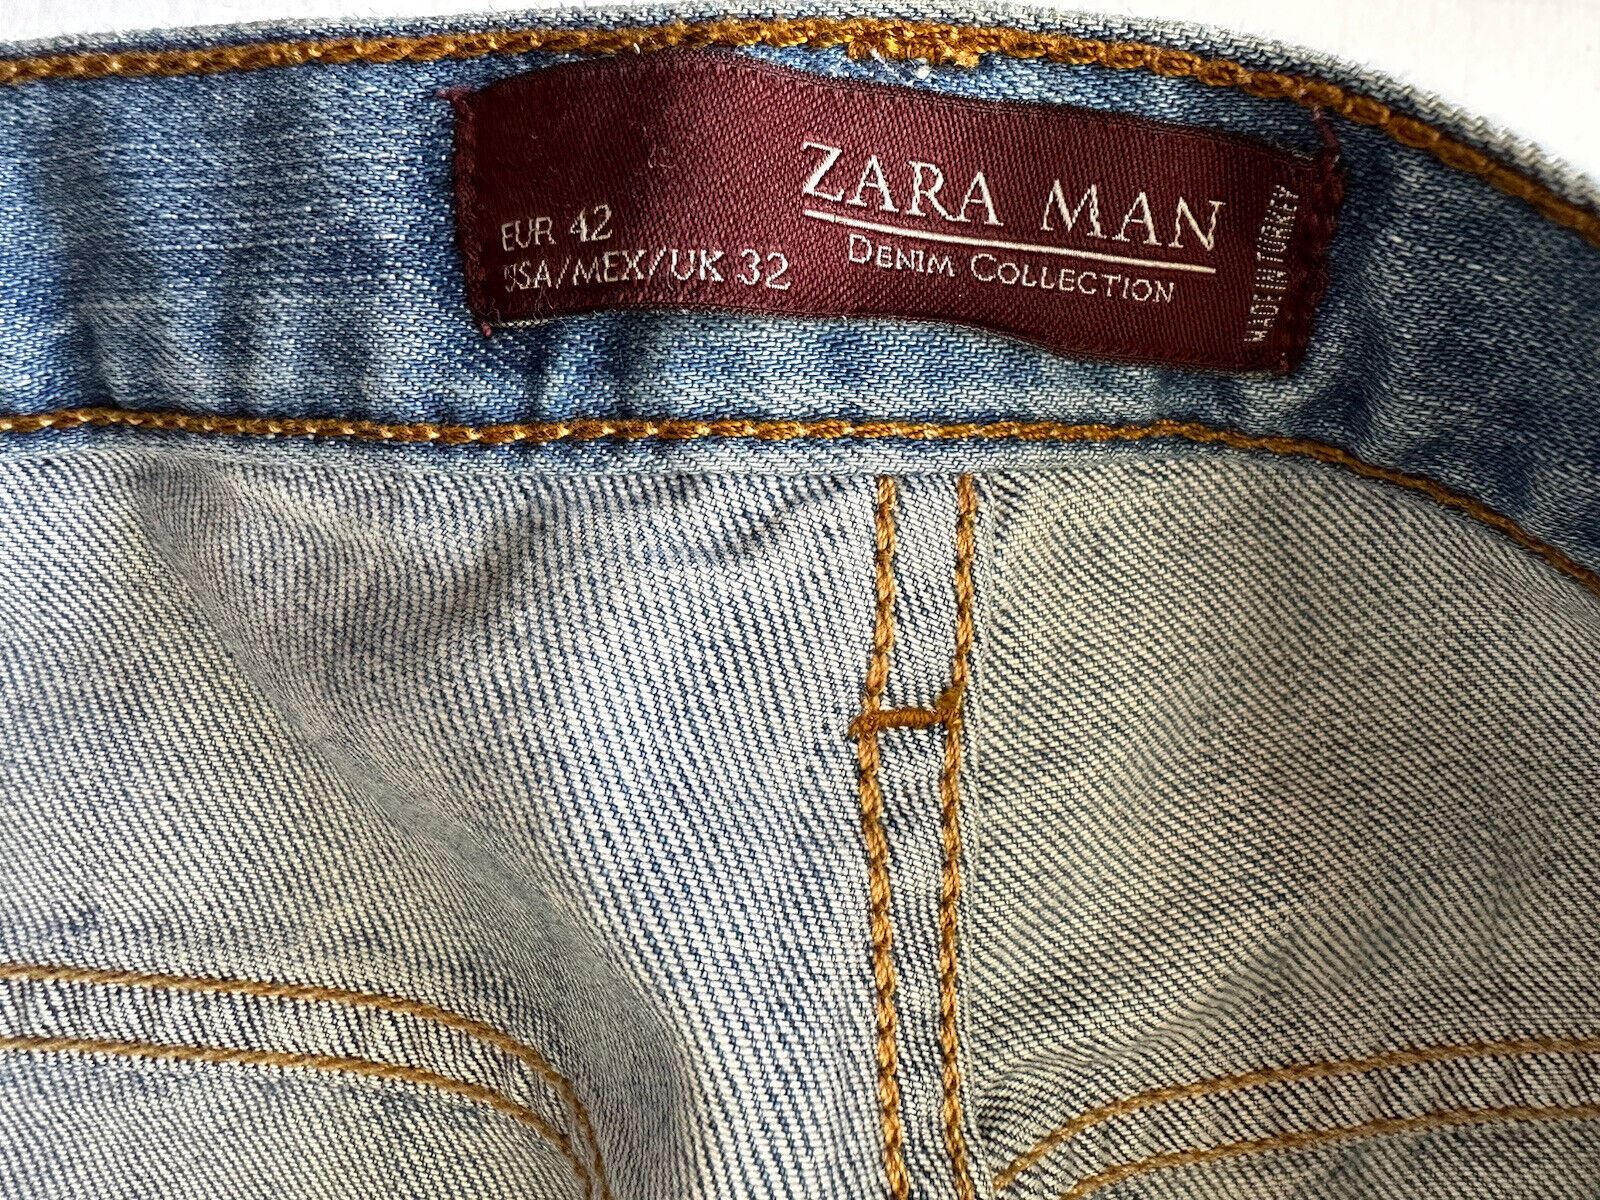 ZARA Men's Light Blue Modern Denim Jeans Size 32 US (34" measured)